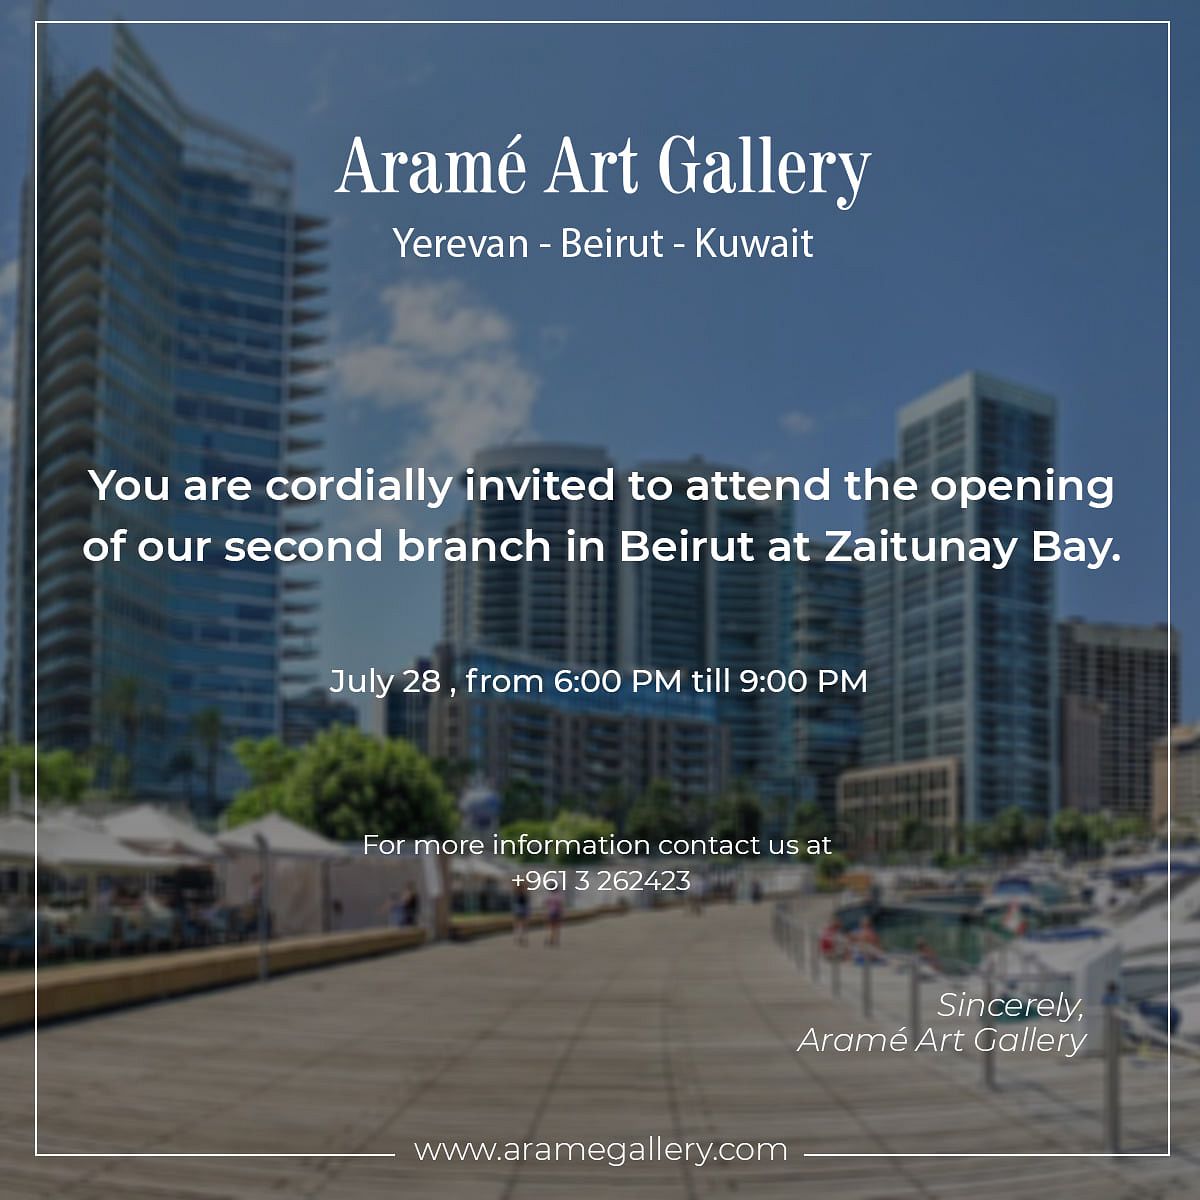 Grand opening of Aramé Art Gallery new Branch in Beirut at Zeytuna Bay thumbnail